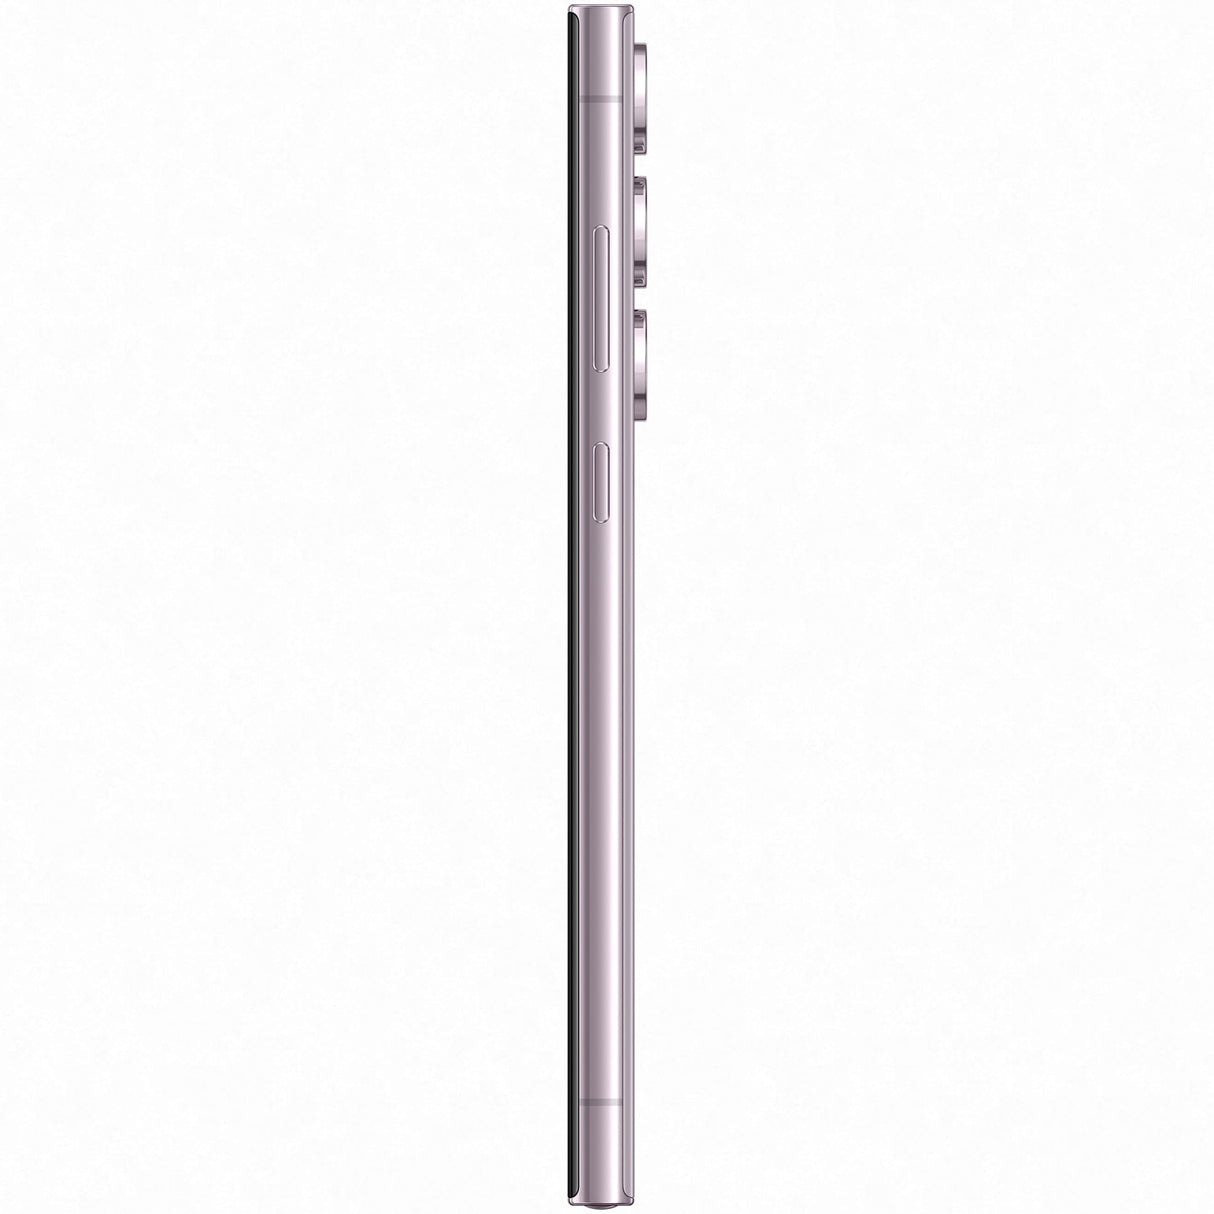 Samsung Galaxy S23 Ultra 5G Mobiltelefon